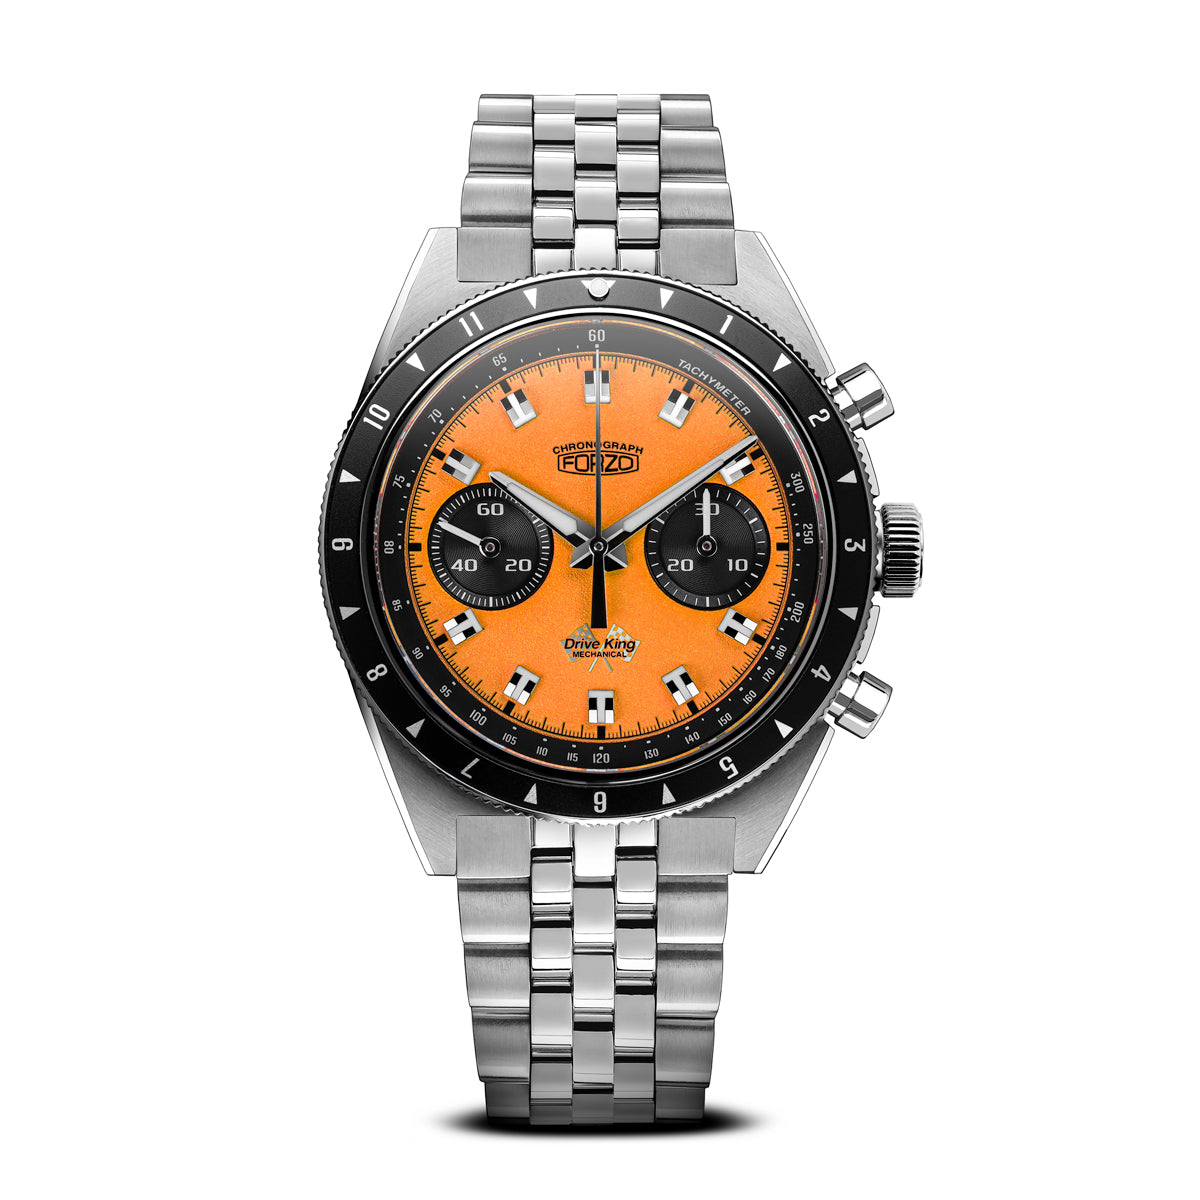 FORZO Drive King Mechanical Chronograph Watch Orange - SS-B02-B